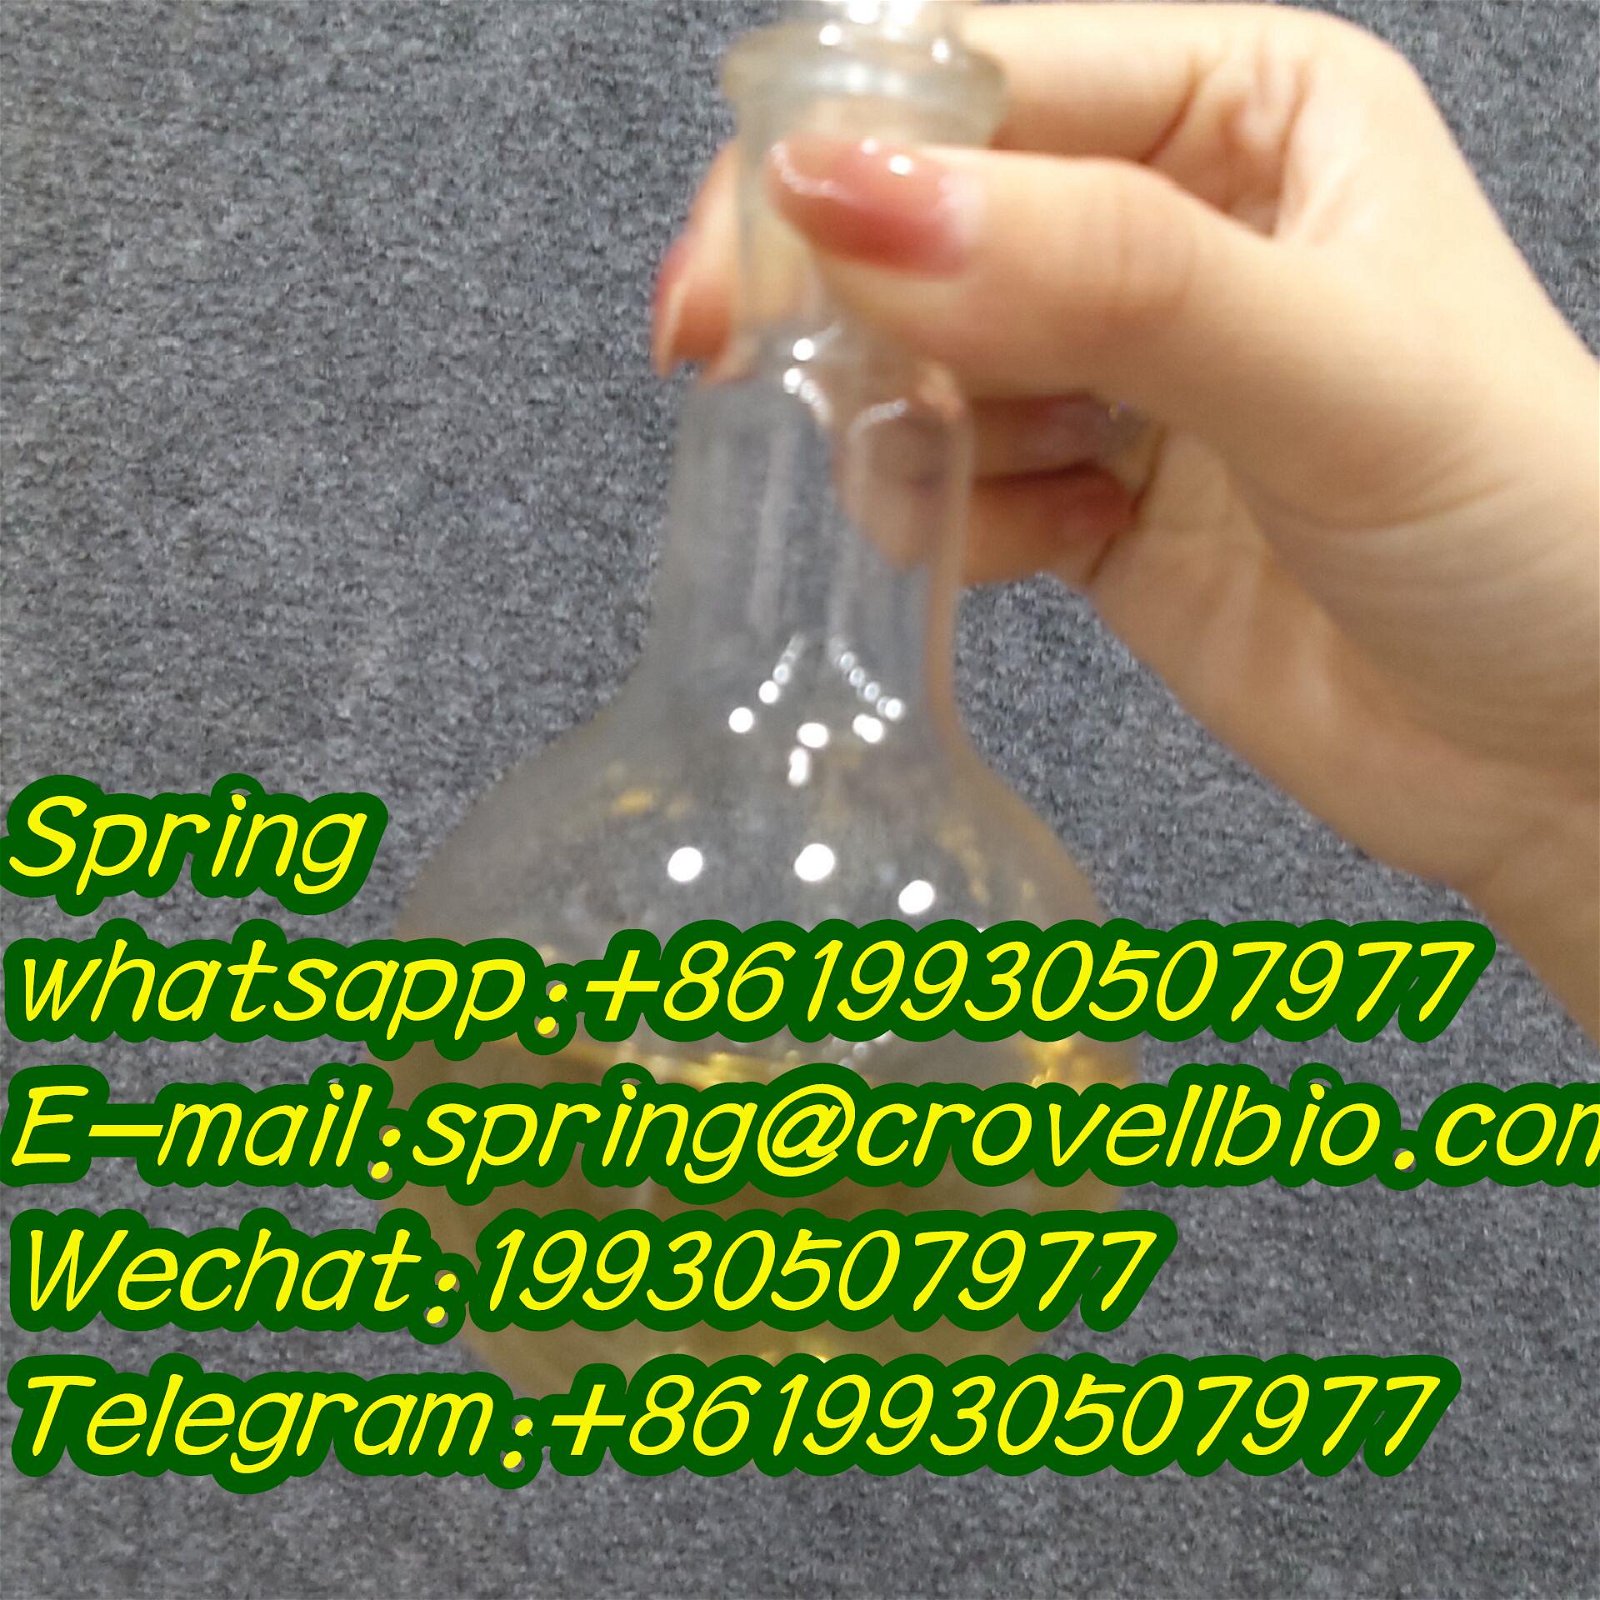 Buy Large stock Cinnamaldehyde China 104-55-2 from China Hebei +8619930507977 5